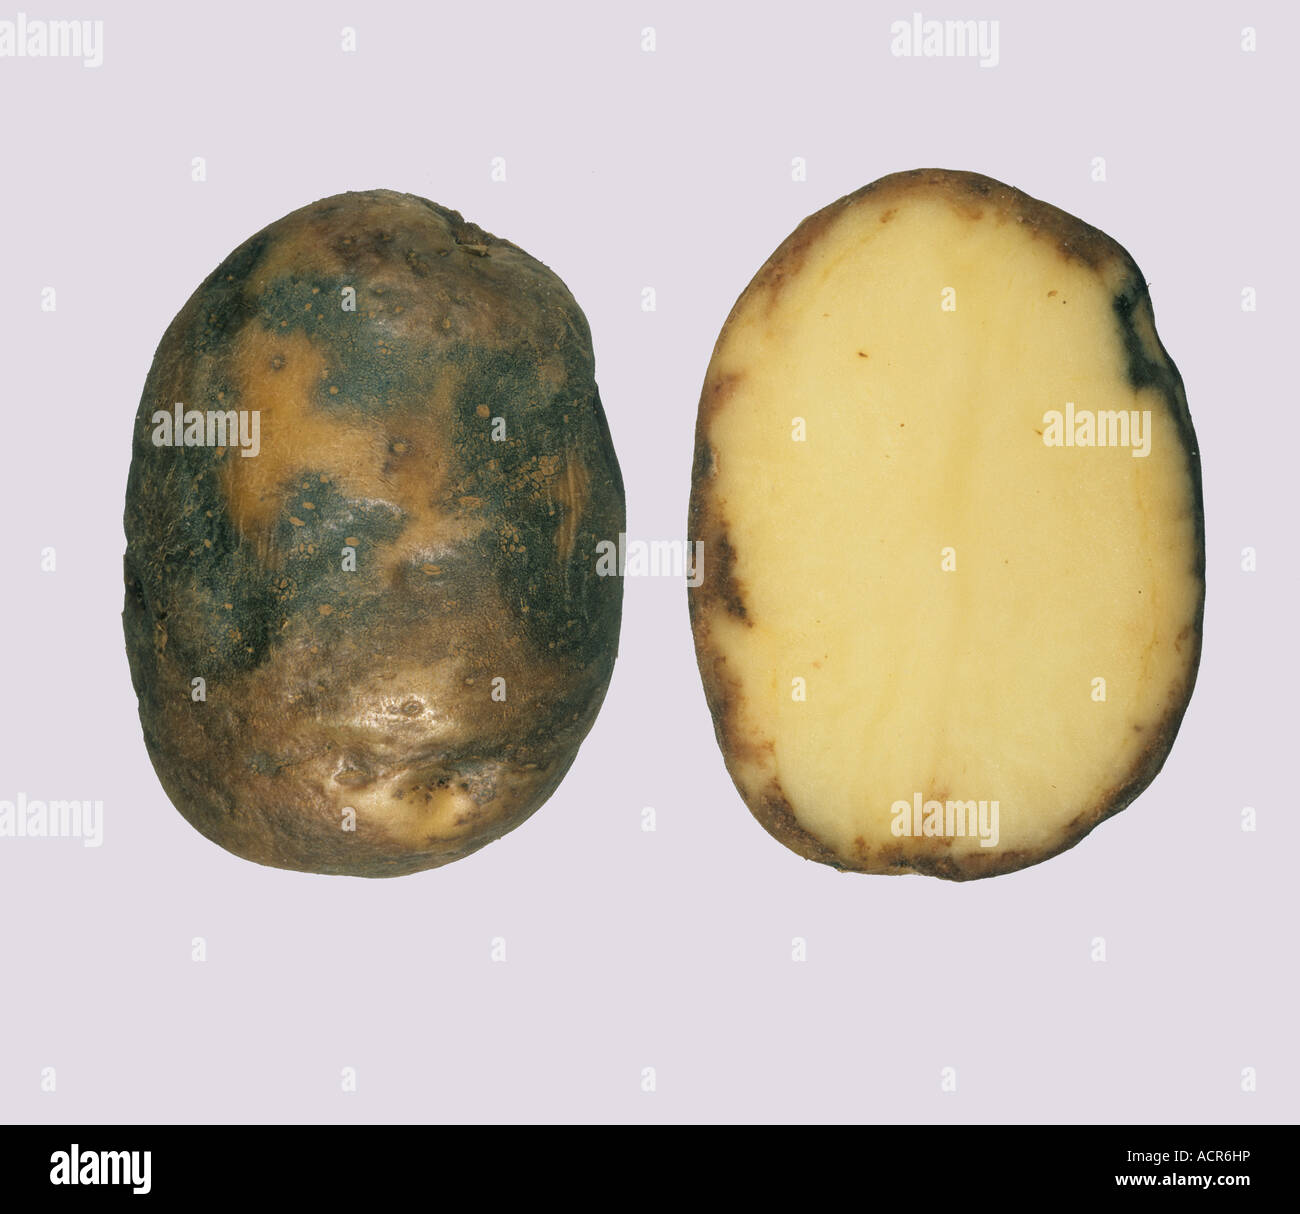 Potato late blight Phytophthora infestans external symptoms and section through potato tuber Stock Photo